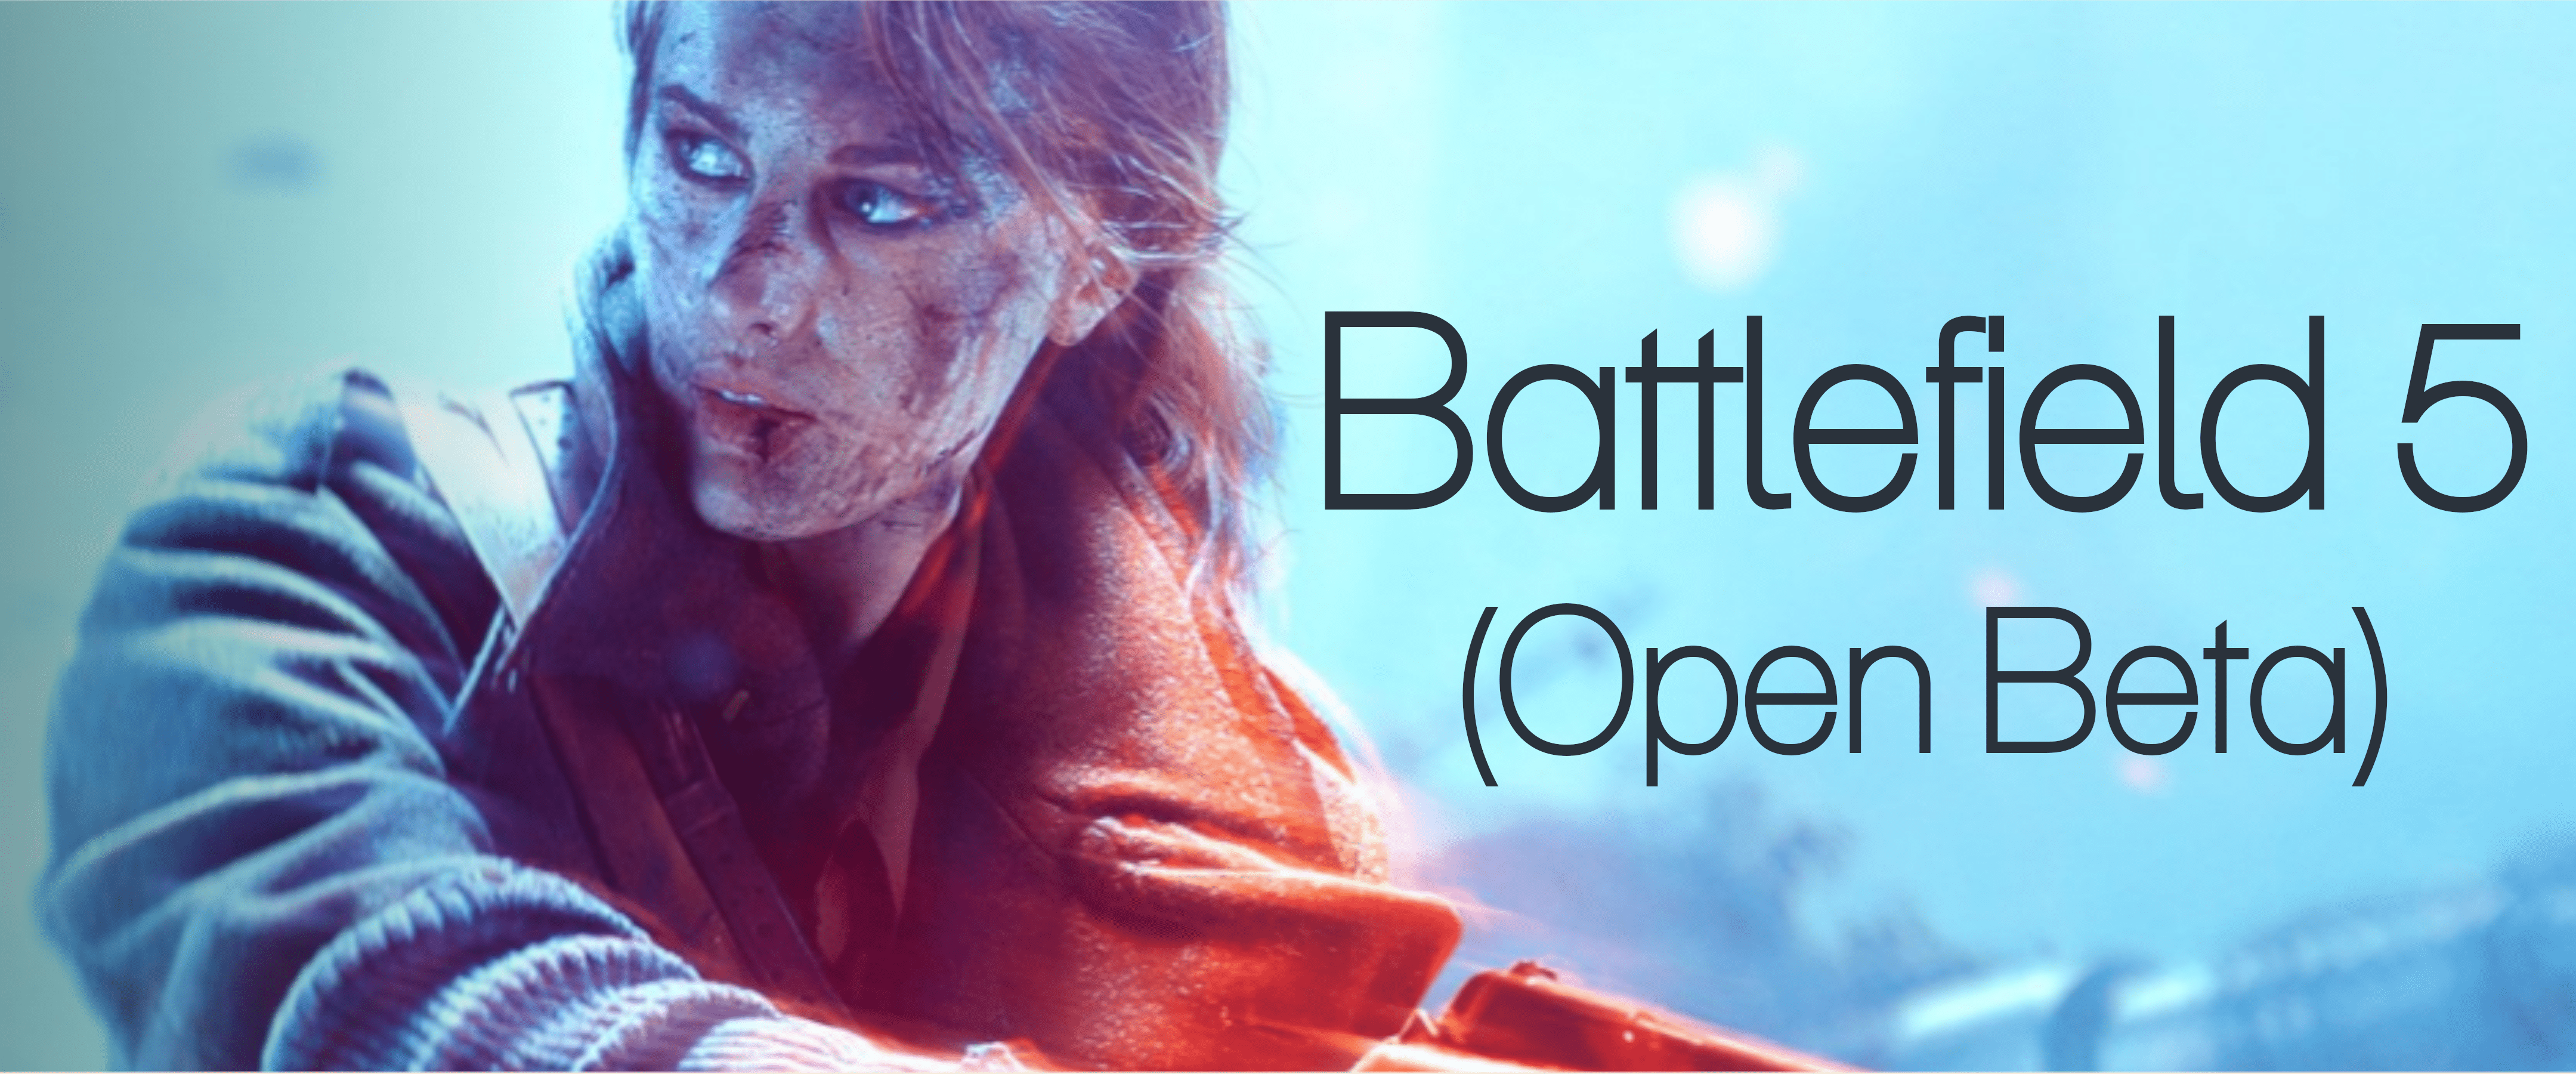 Battlefield 5 (Open Beta) 1